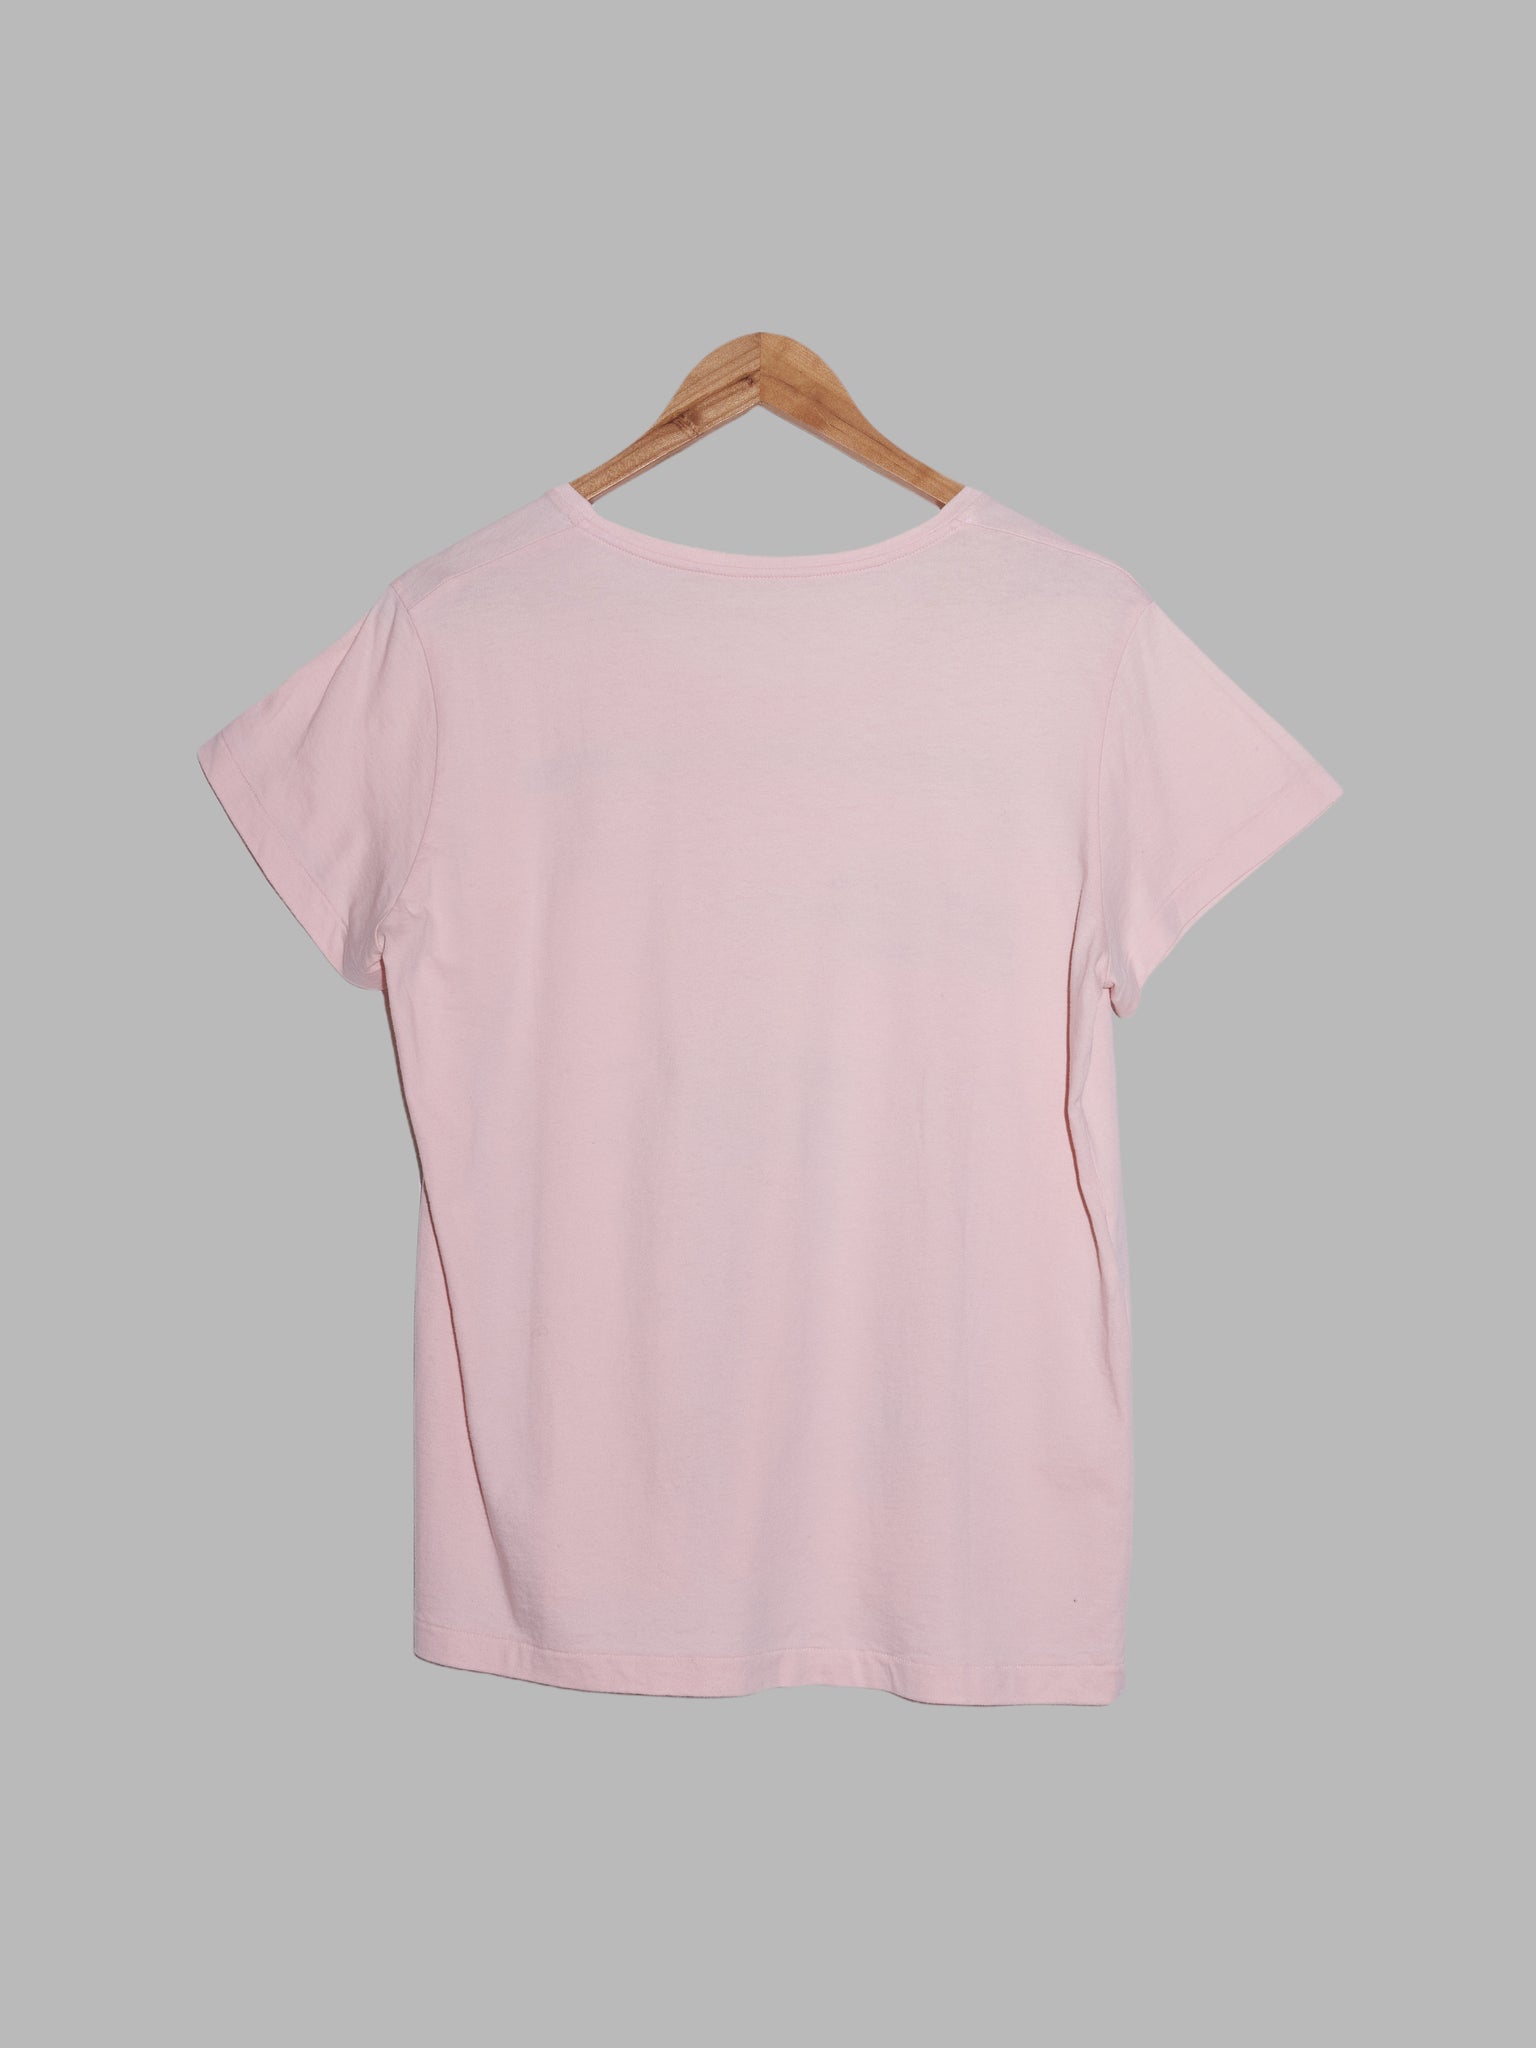 Cosmic Wonder pink cotton t-shirt with print of 'Cosmic Wonder Free Press 1' - S